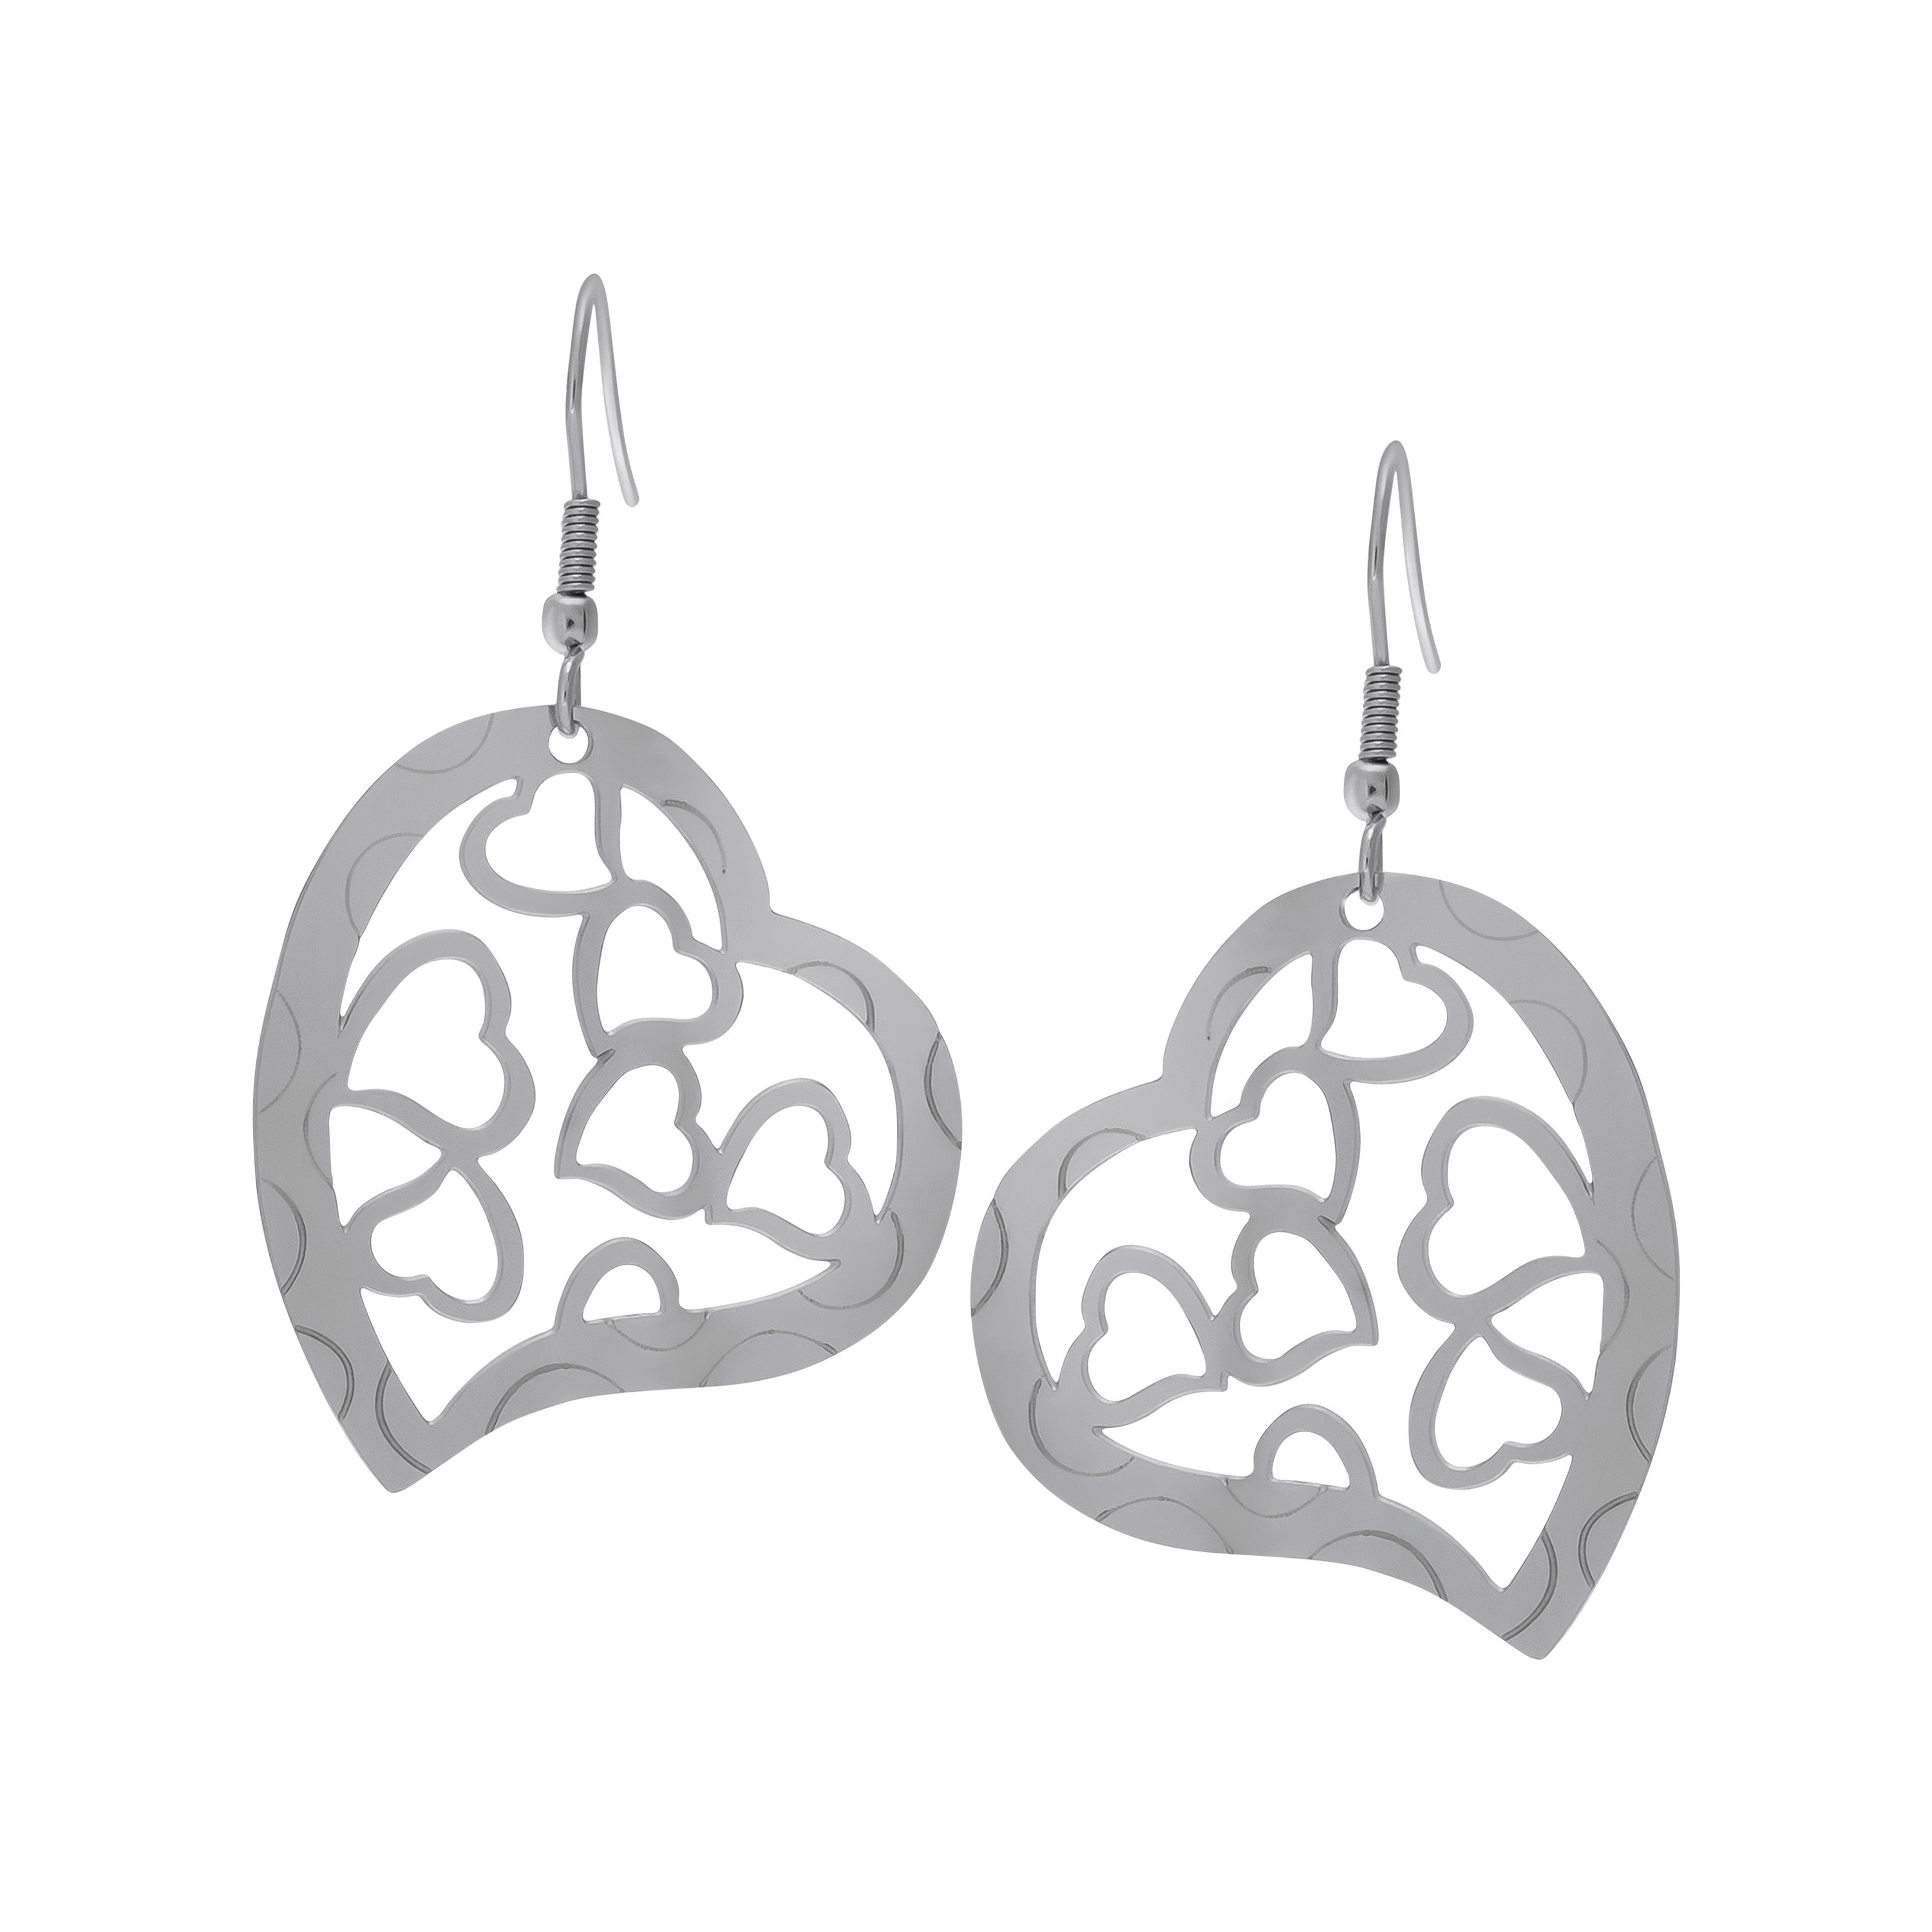 Silver-plated Stainless Steel Heart Earrings